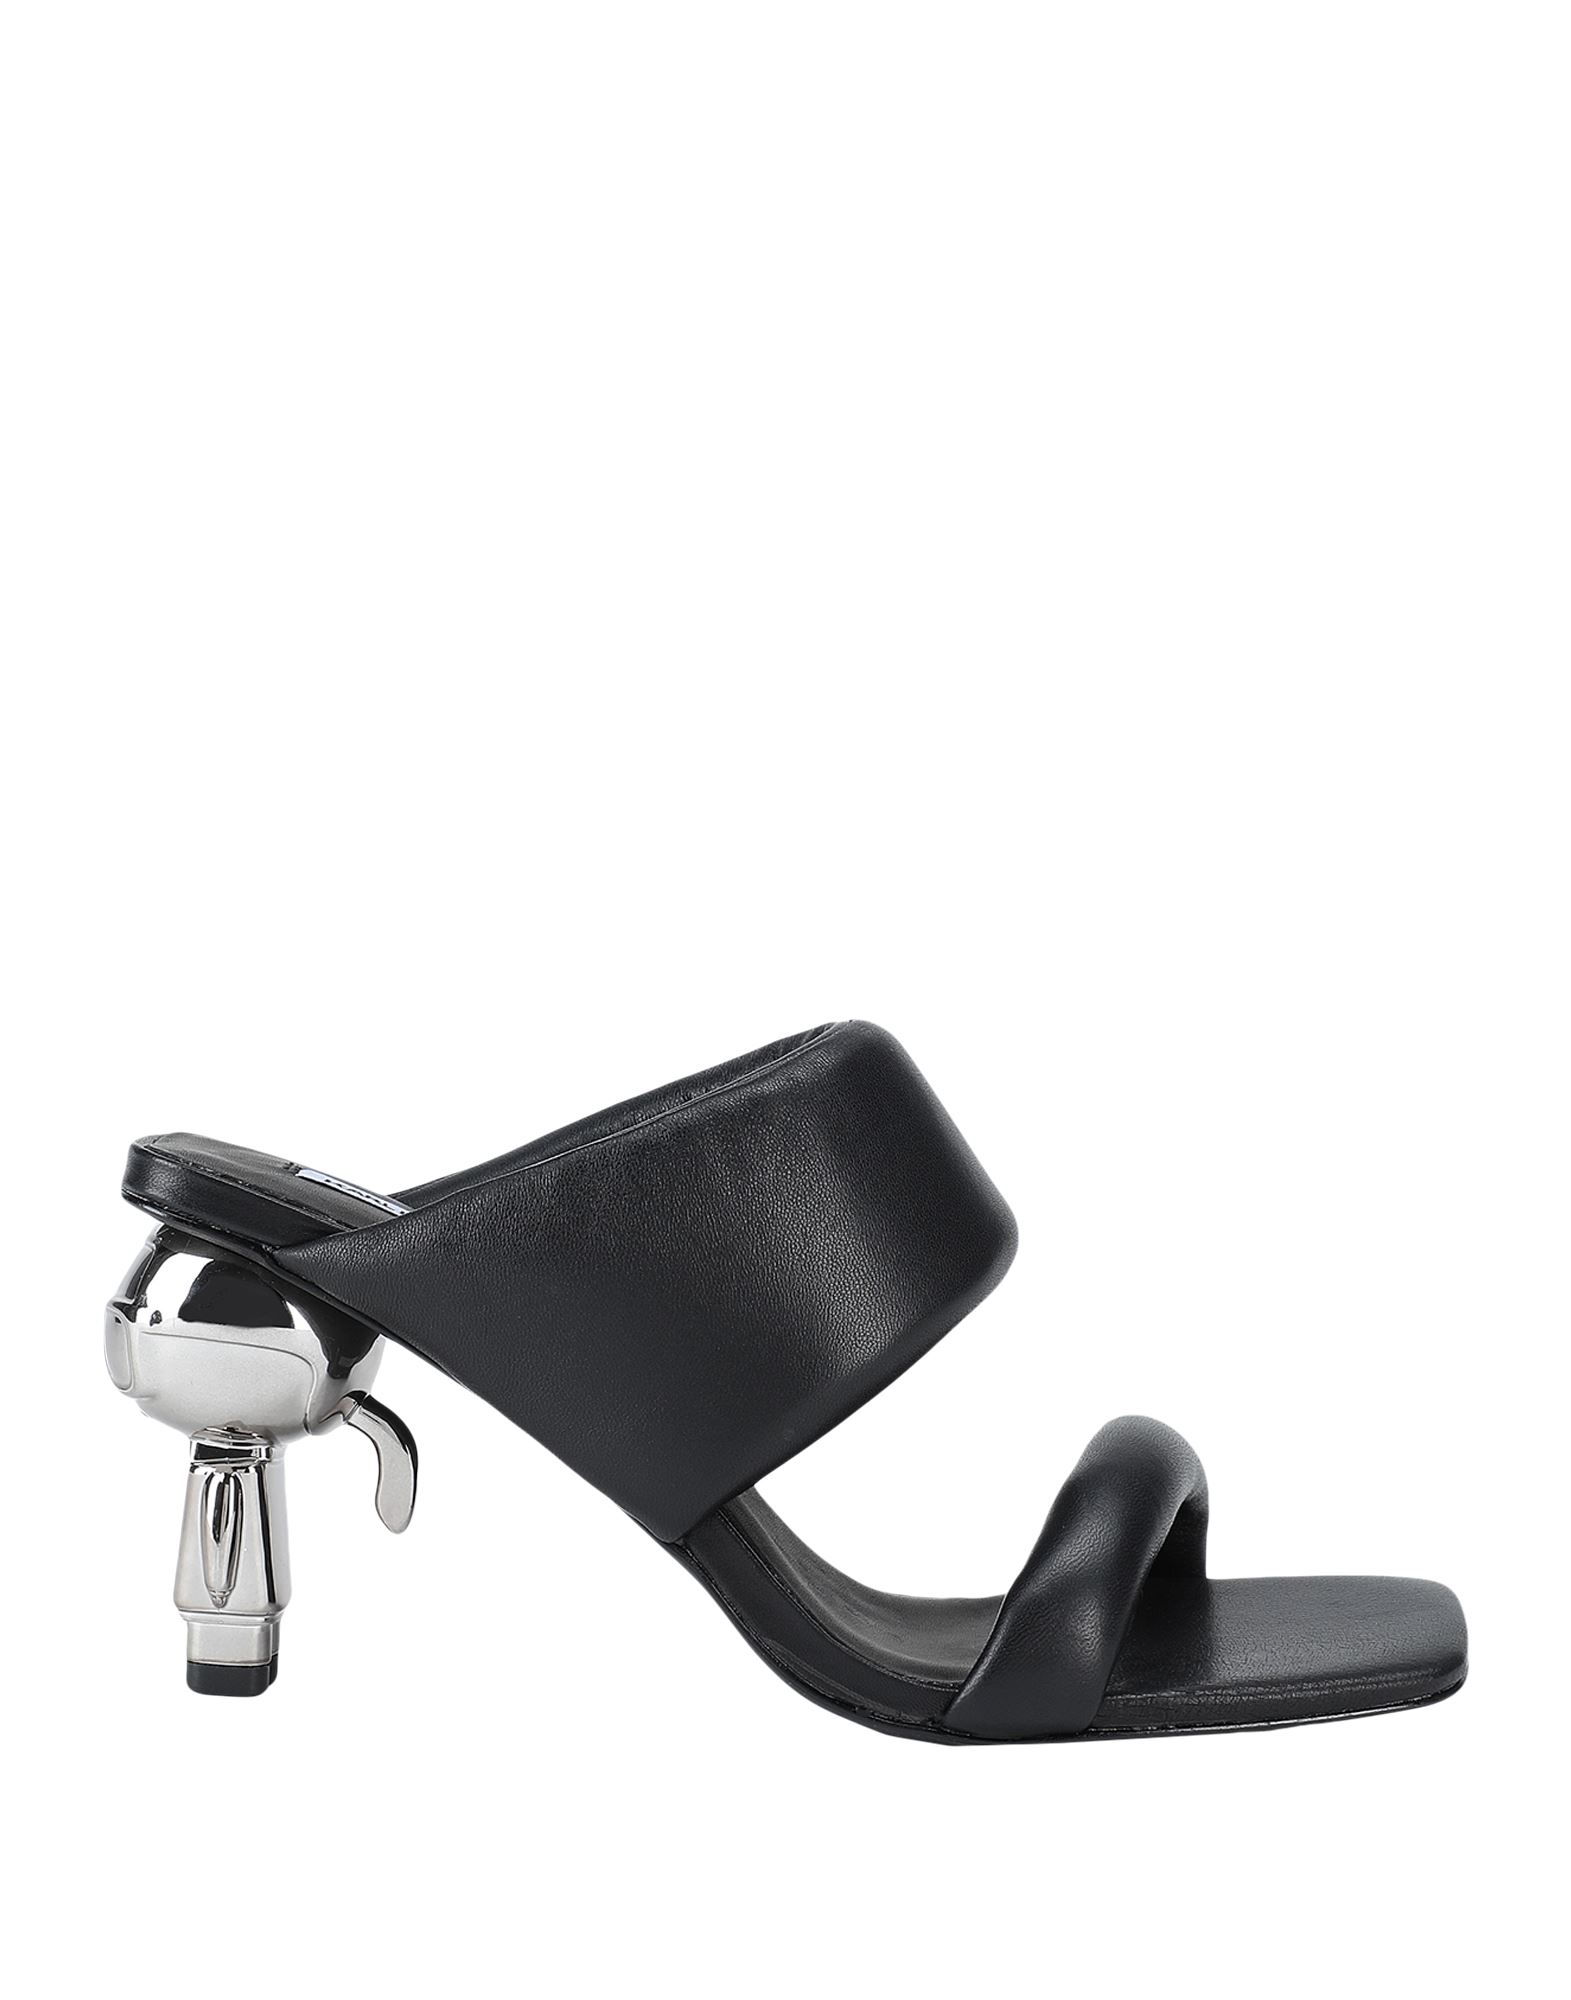 Karl Lagerfeld Sandals In Black